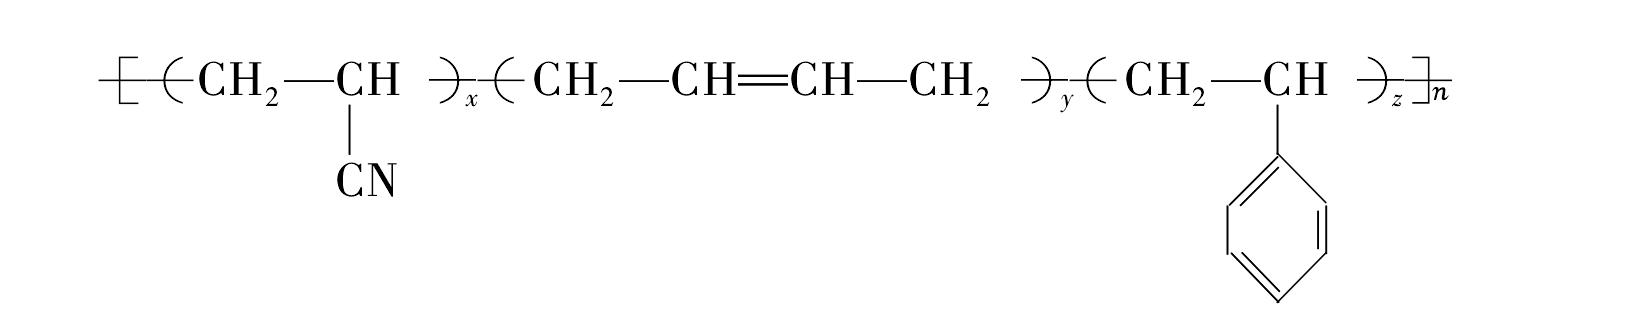 Lesson 19　Styrene-Acrylonitrile(SAN)and Arylonitrile-Butadiene-Styrene(ABS)